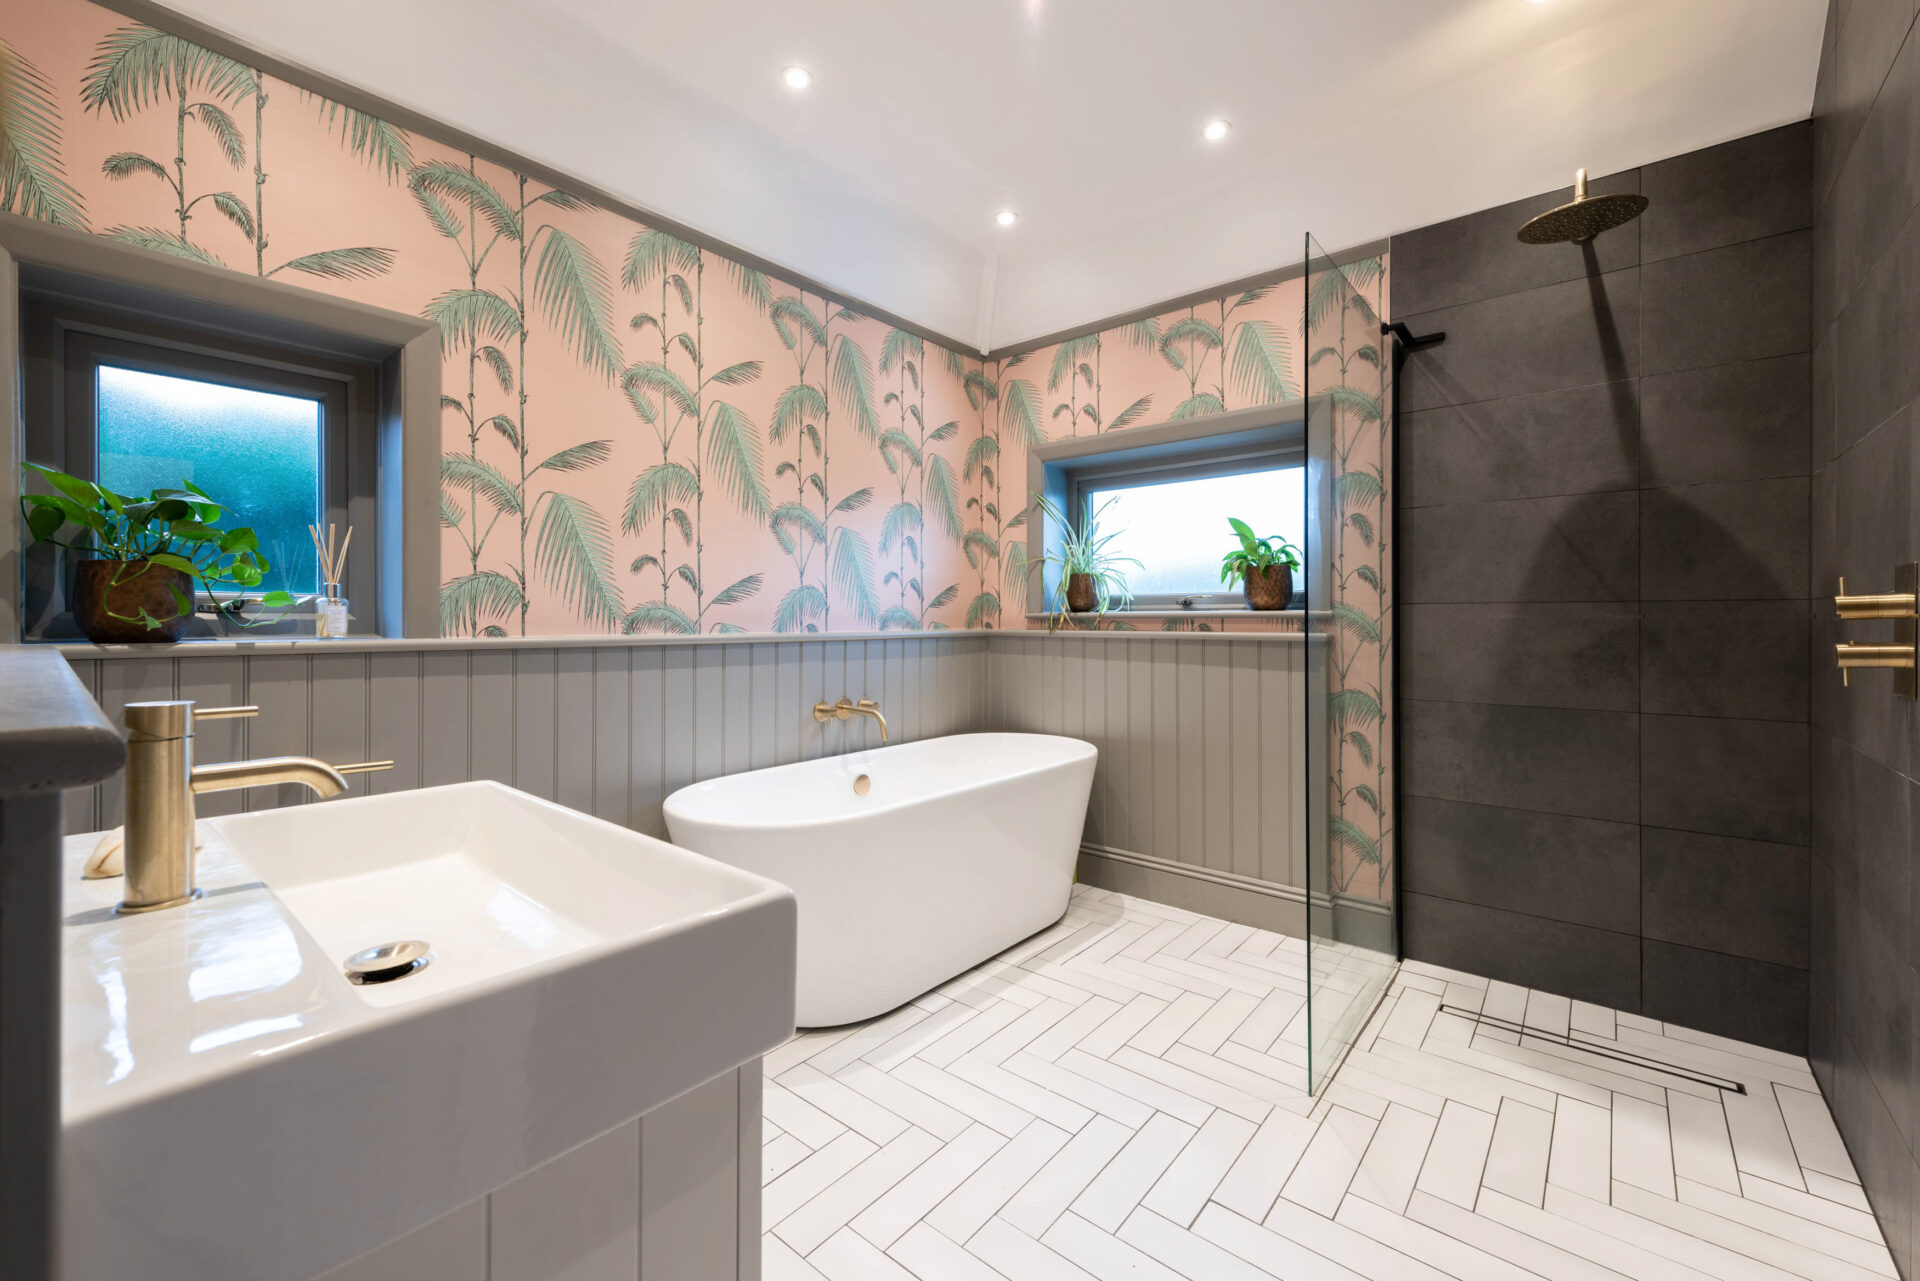 sanitary-ware-ceramics-tiles-interior-design-free-standing-parker-bathroom-brighton-studio-bagno-1